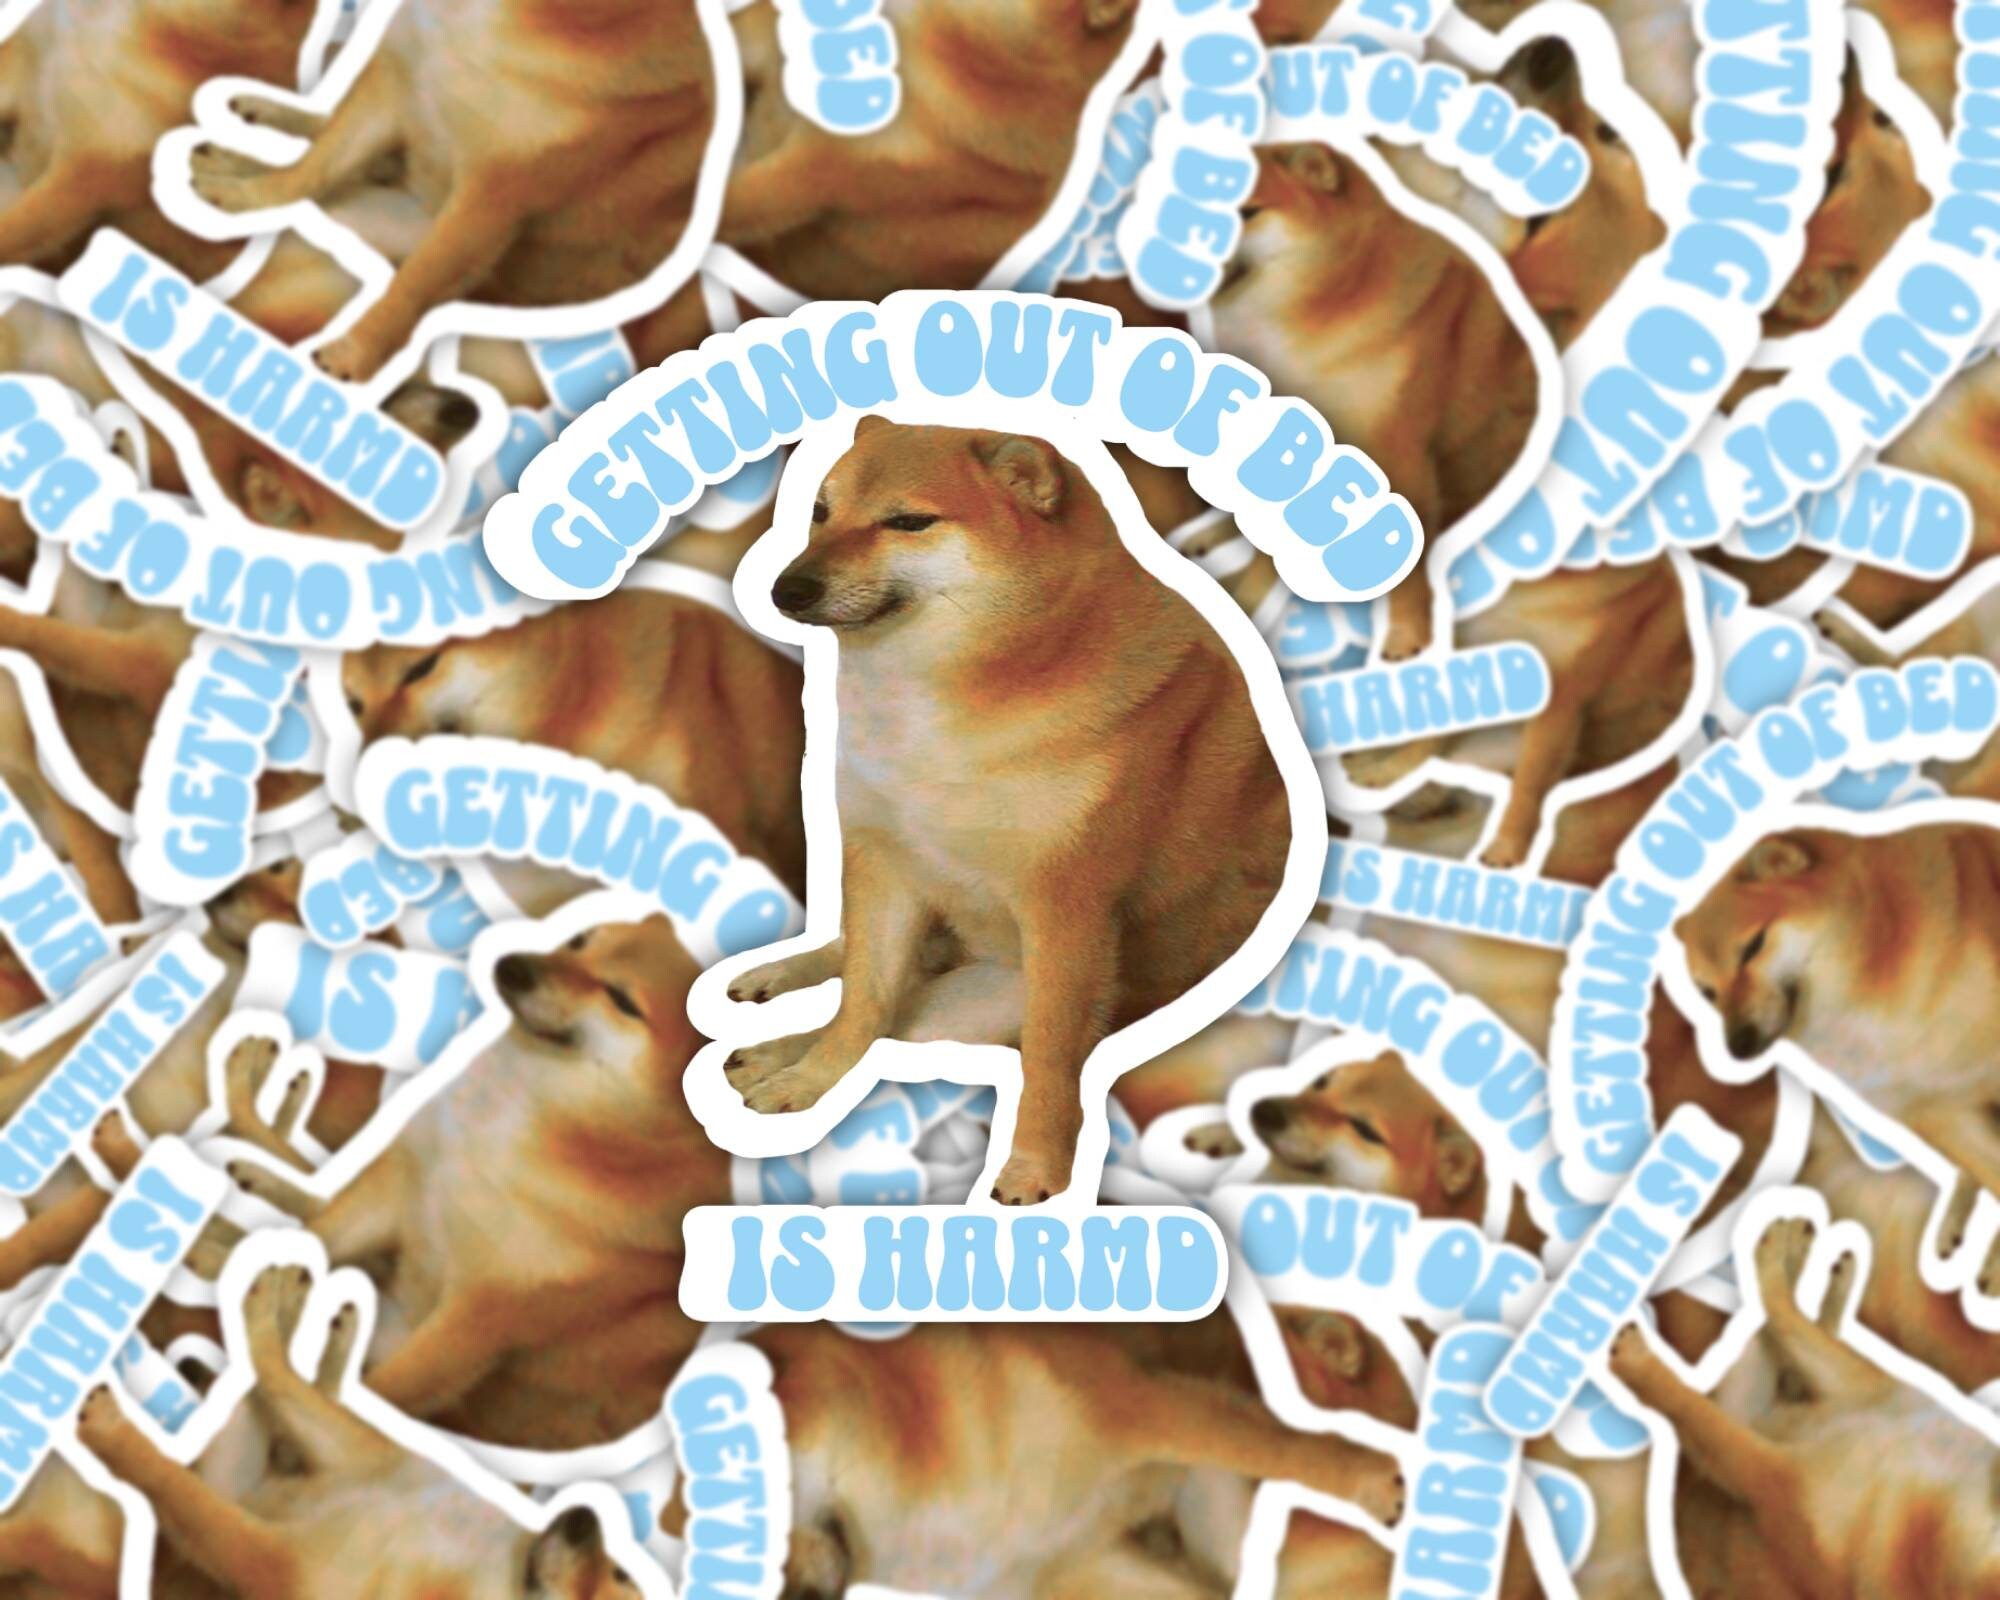 Cheems Dog Meme' Sticker